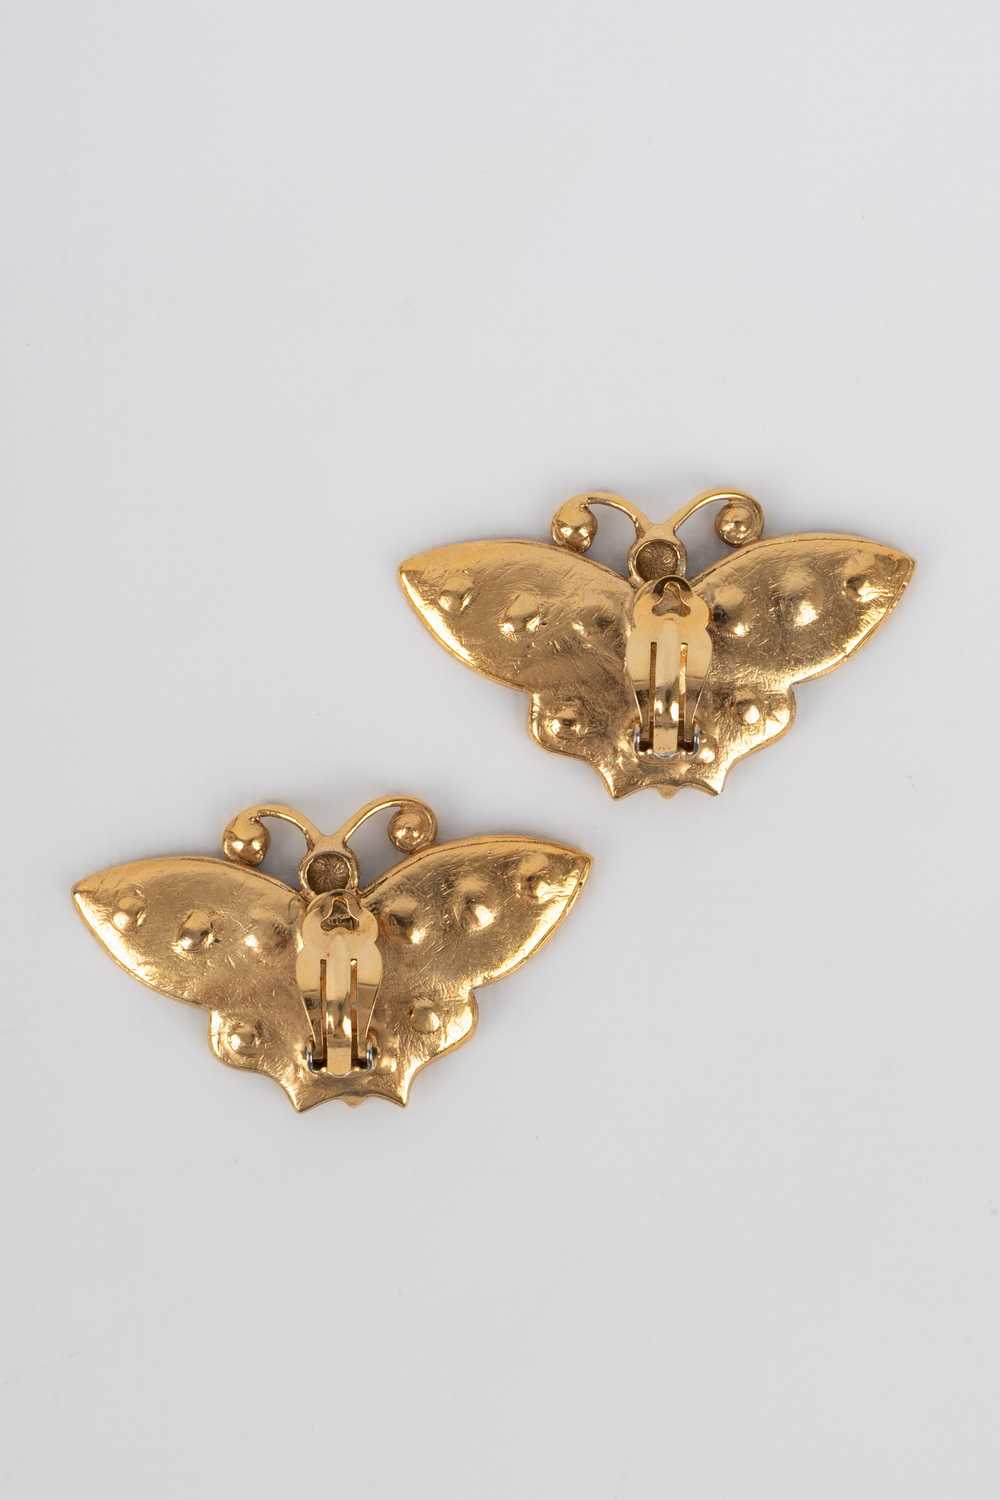 Christian Dior "Butterflies" earrings - image 4